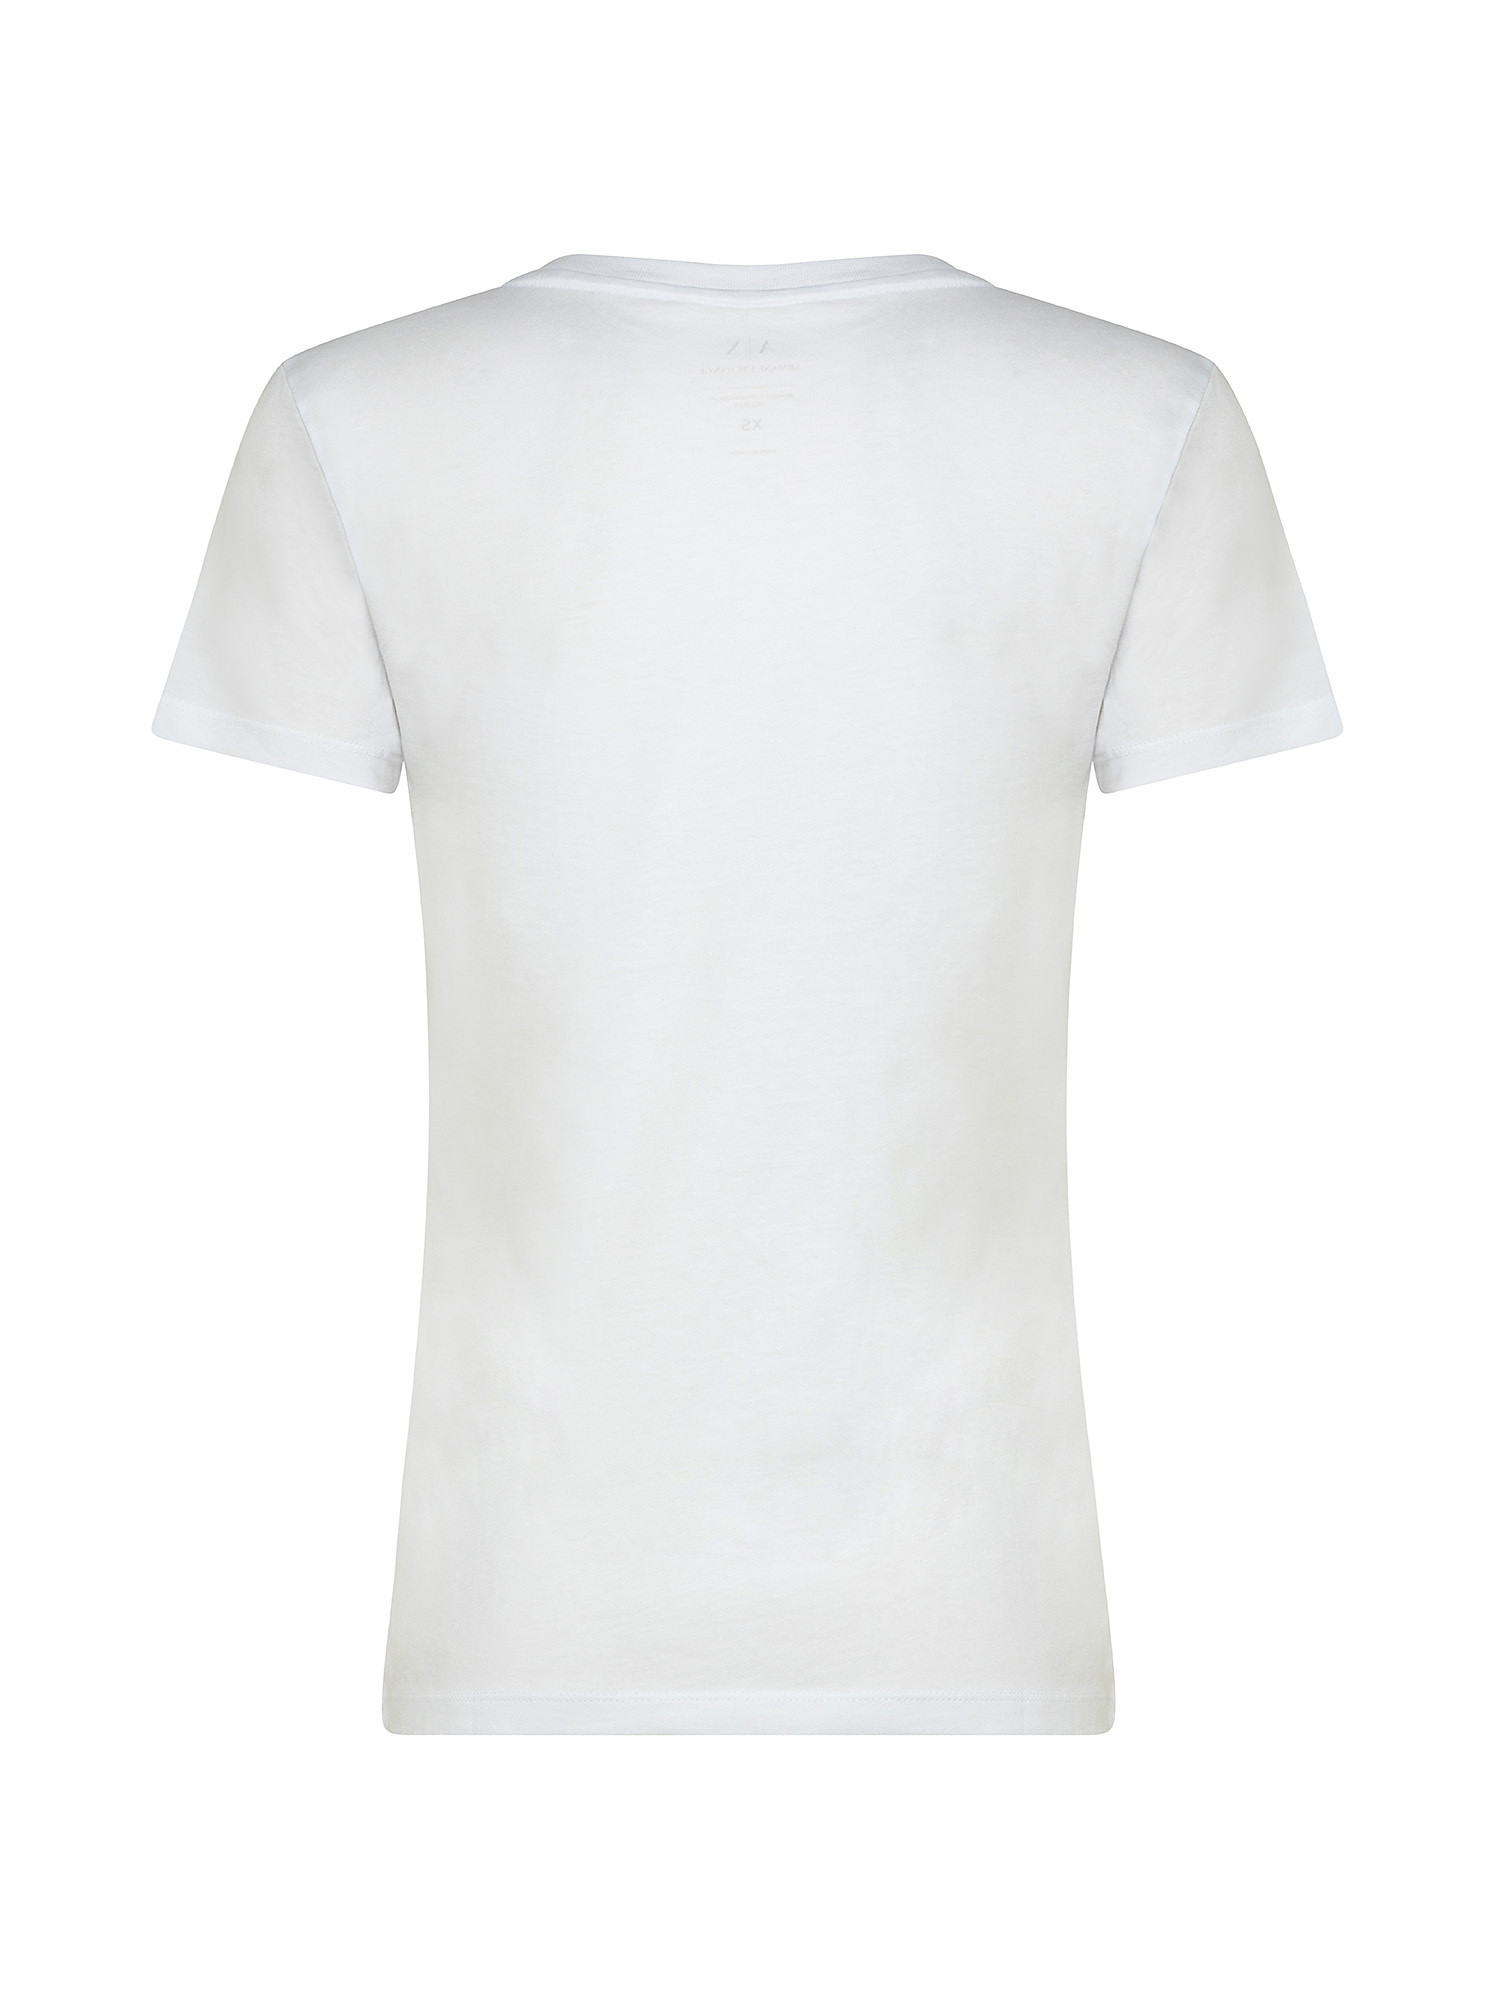 T-shirt con stampa, Bianco, large image number 1